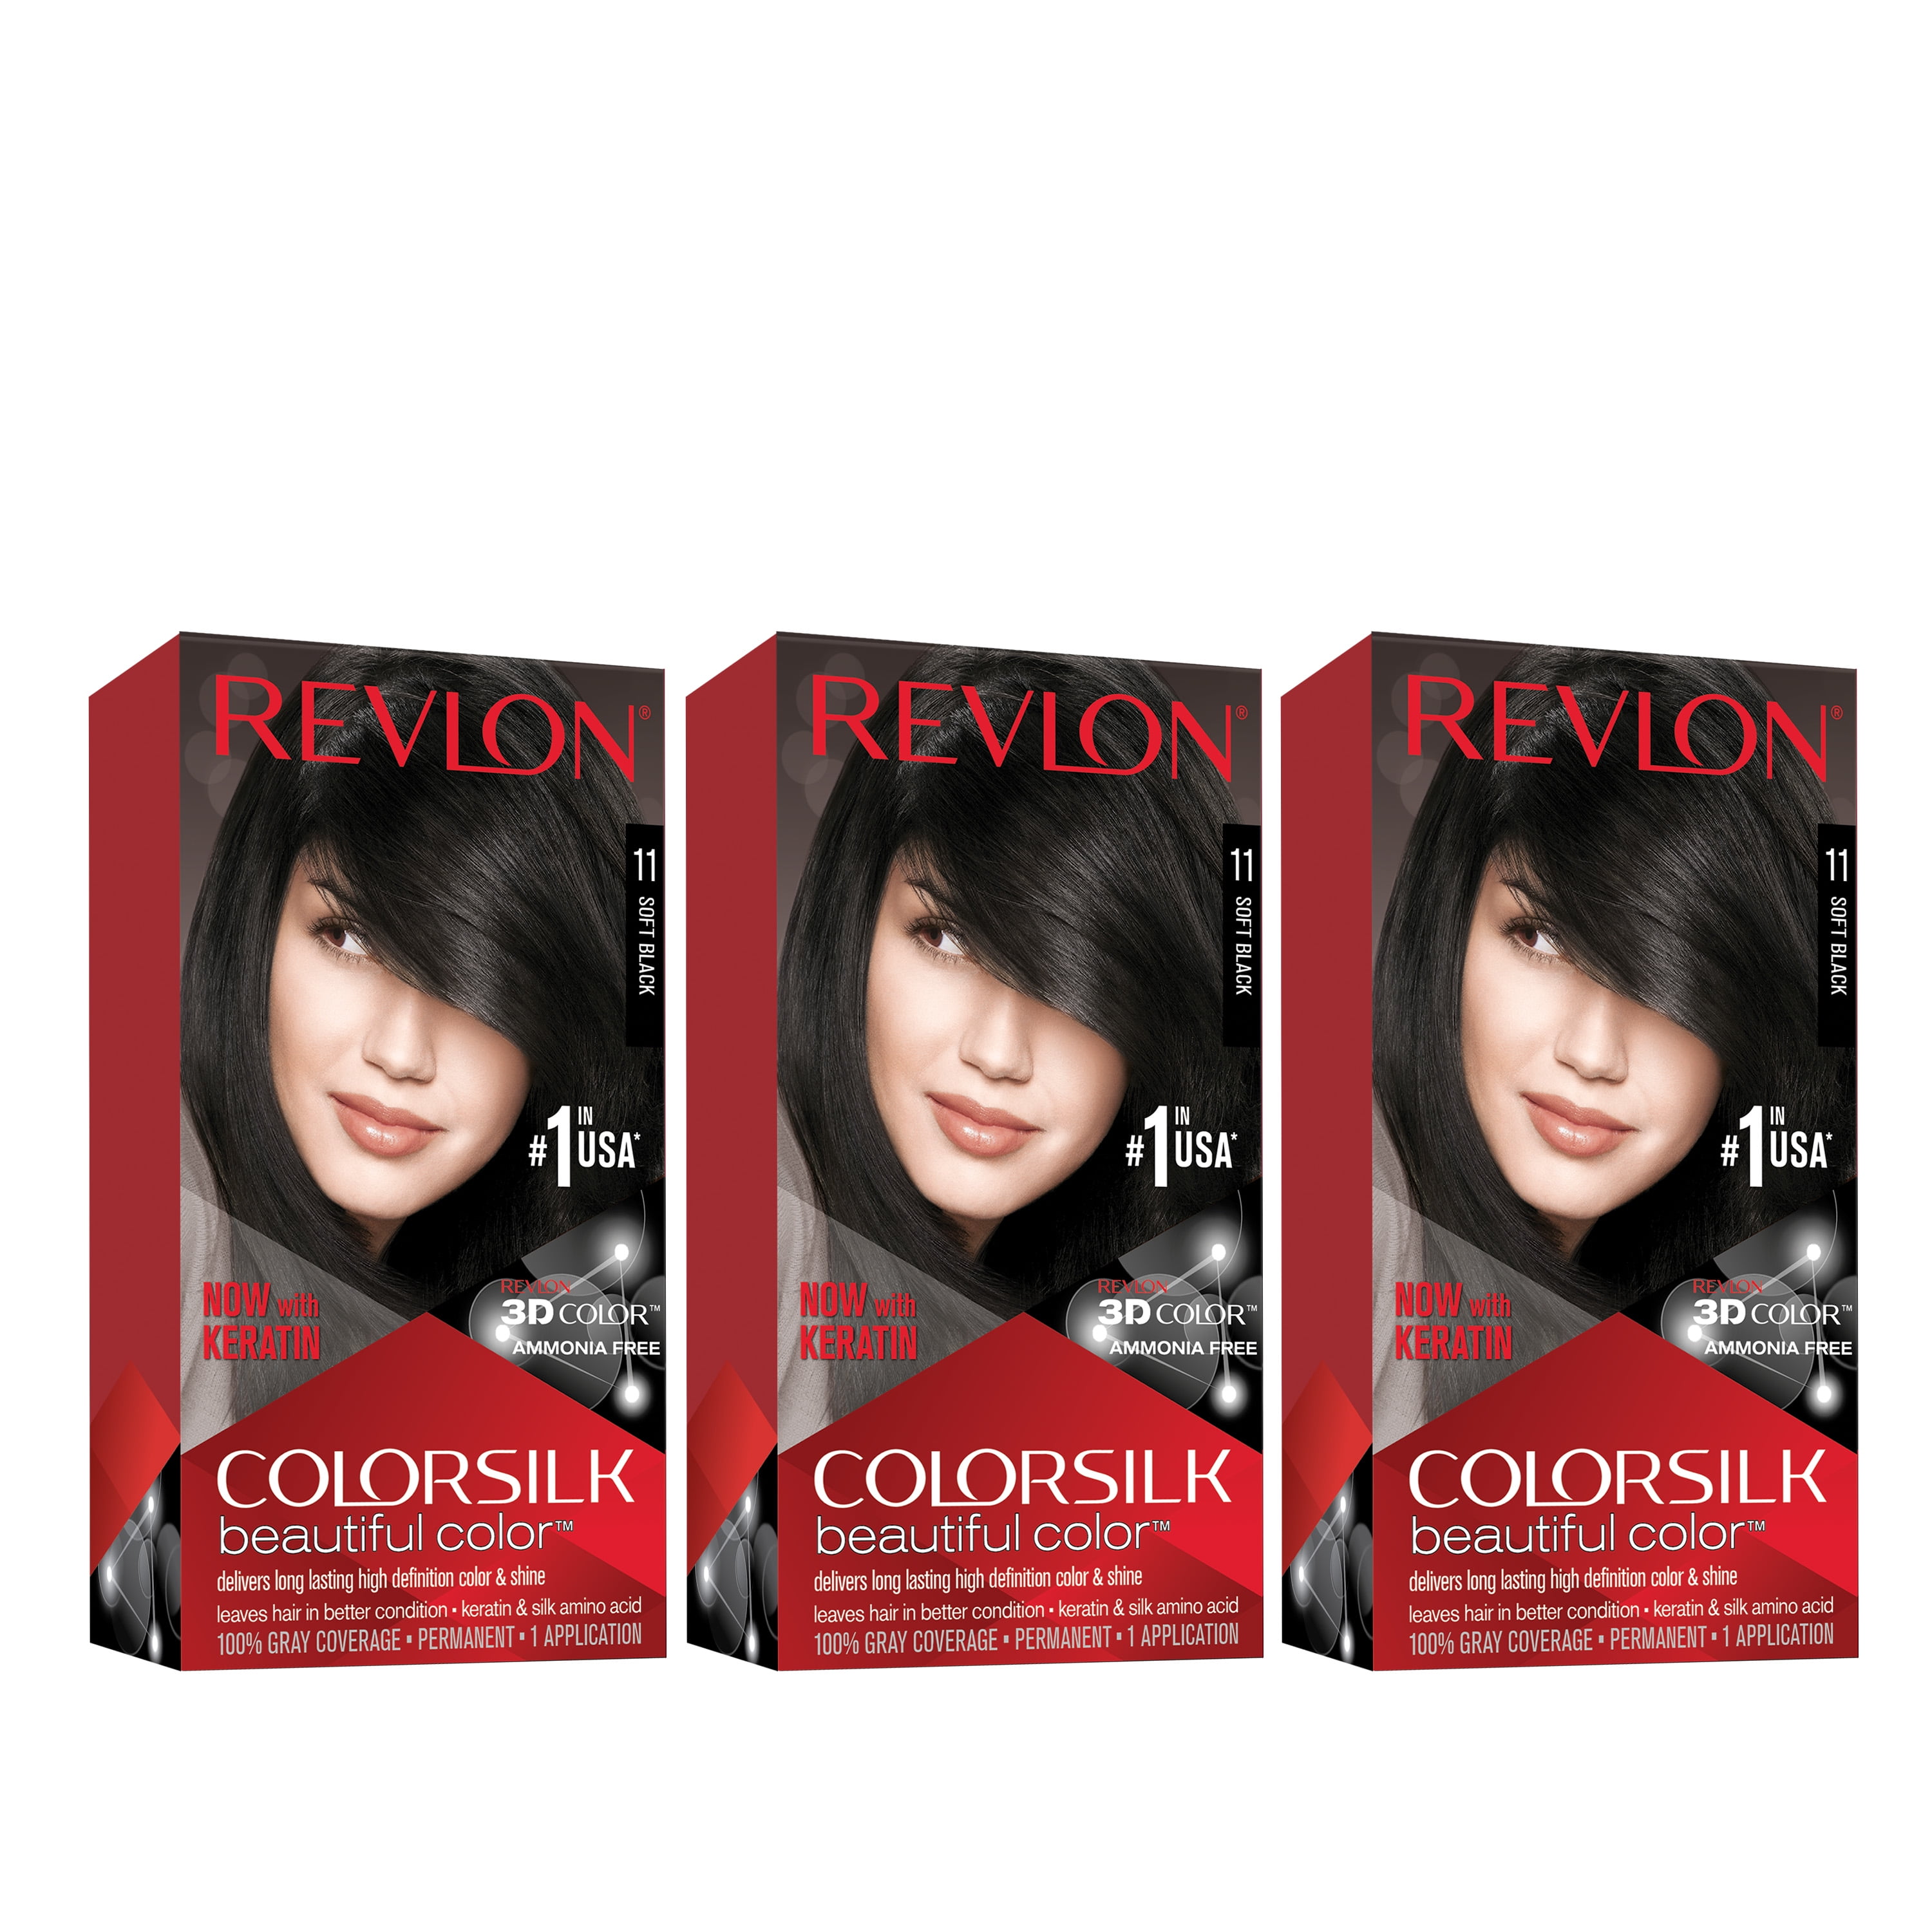 Revlon Colorsilk Beautiful Color Permanent Hair Dye, Dark Brown, At-Home  Full Coverage Application Kit, 11 Soft Black, 3 Pack 